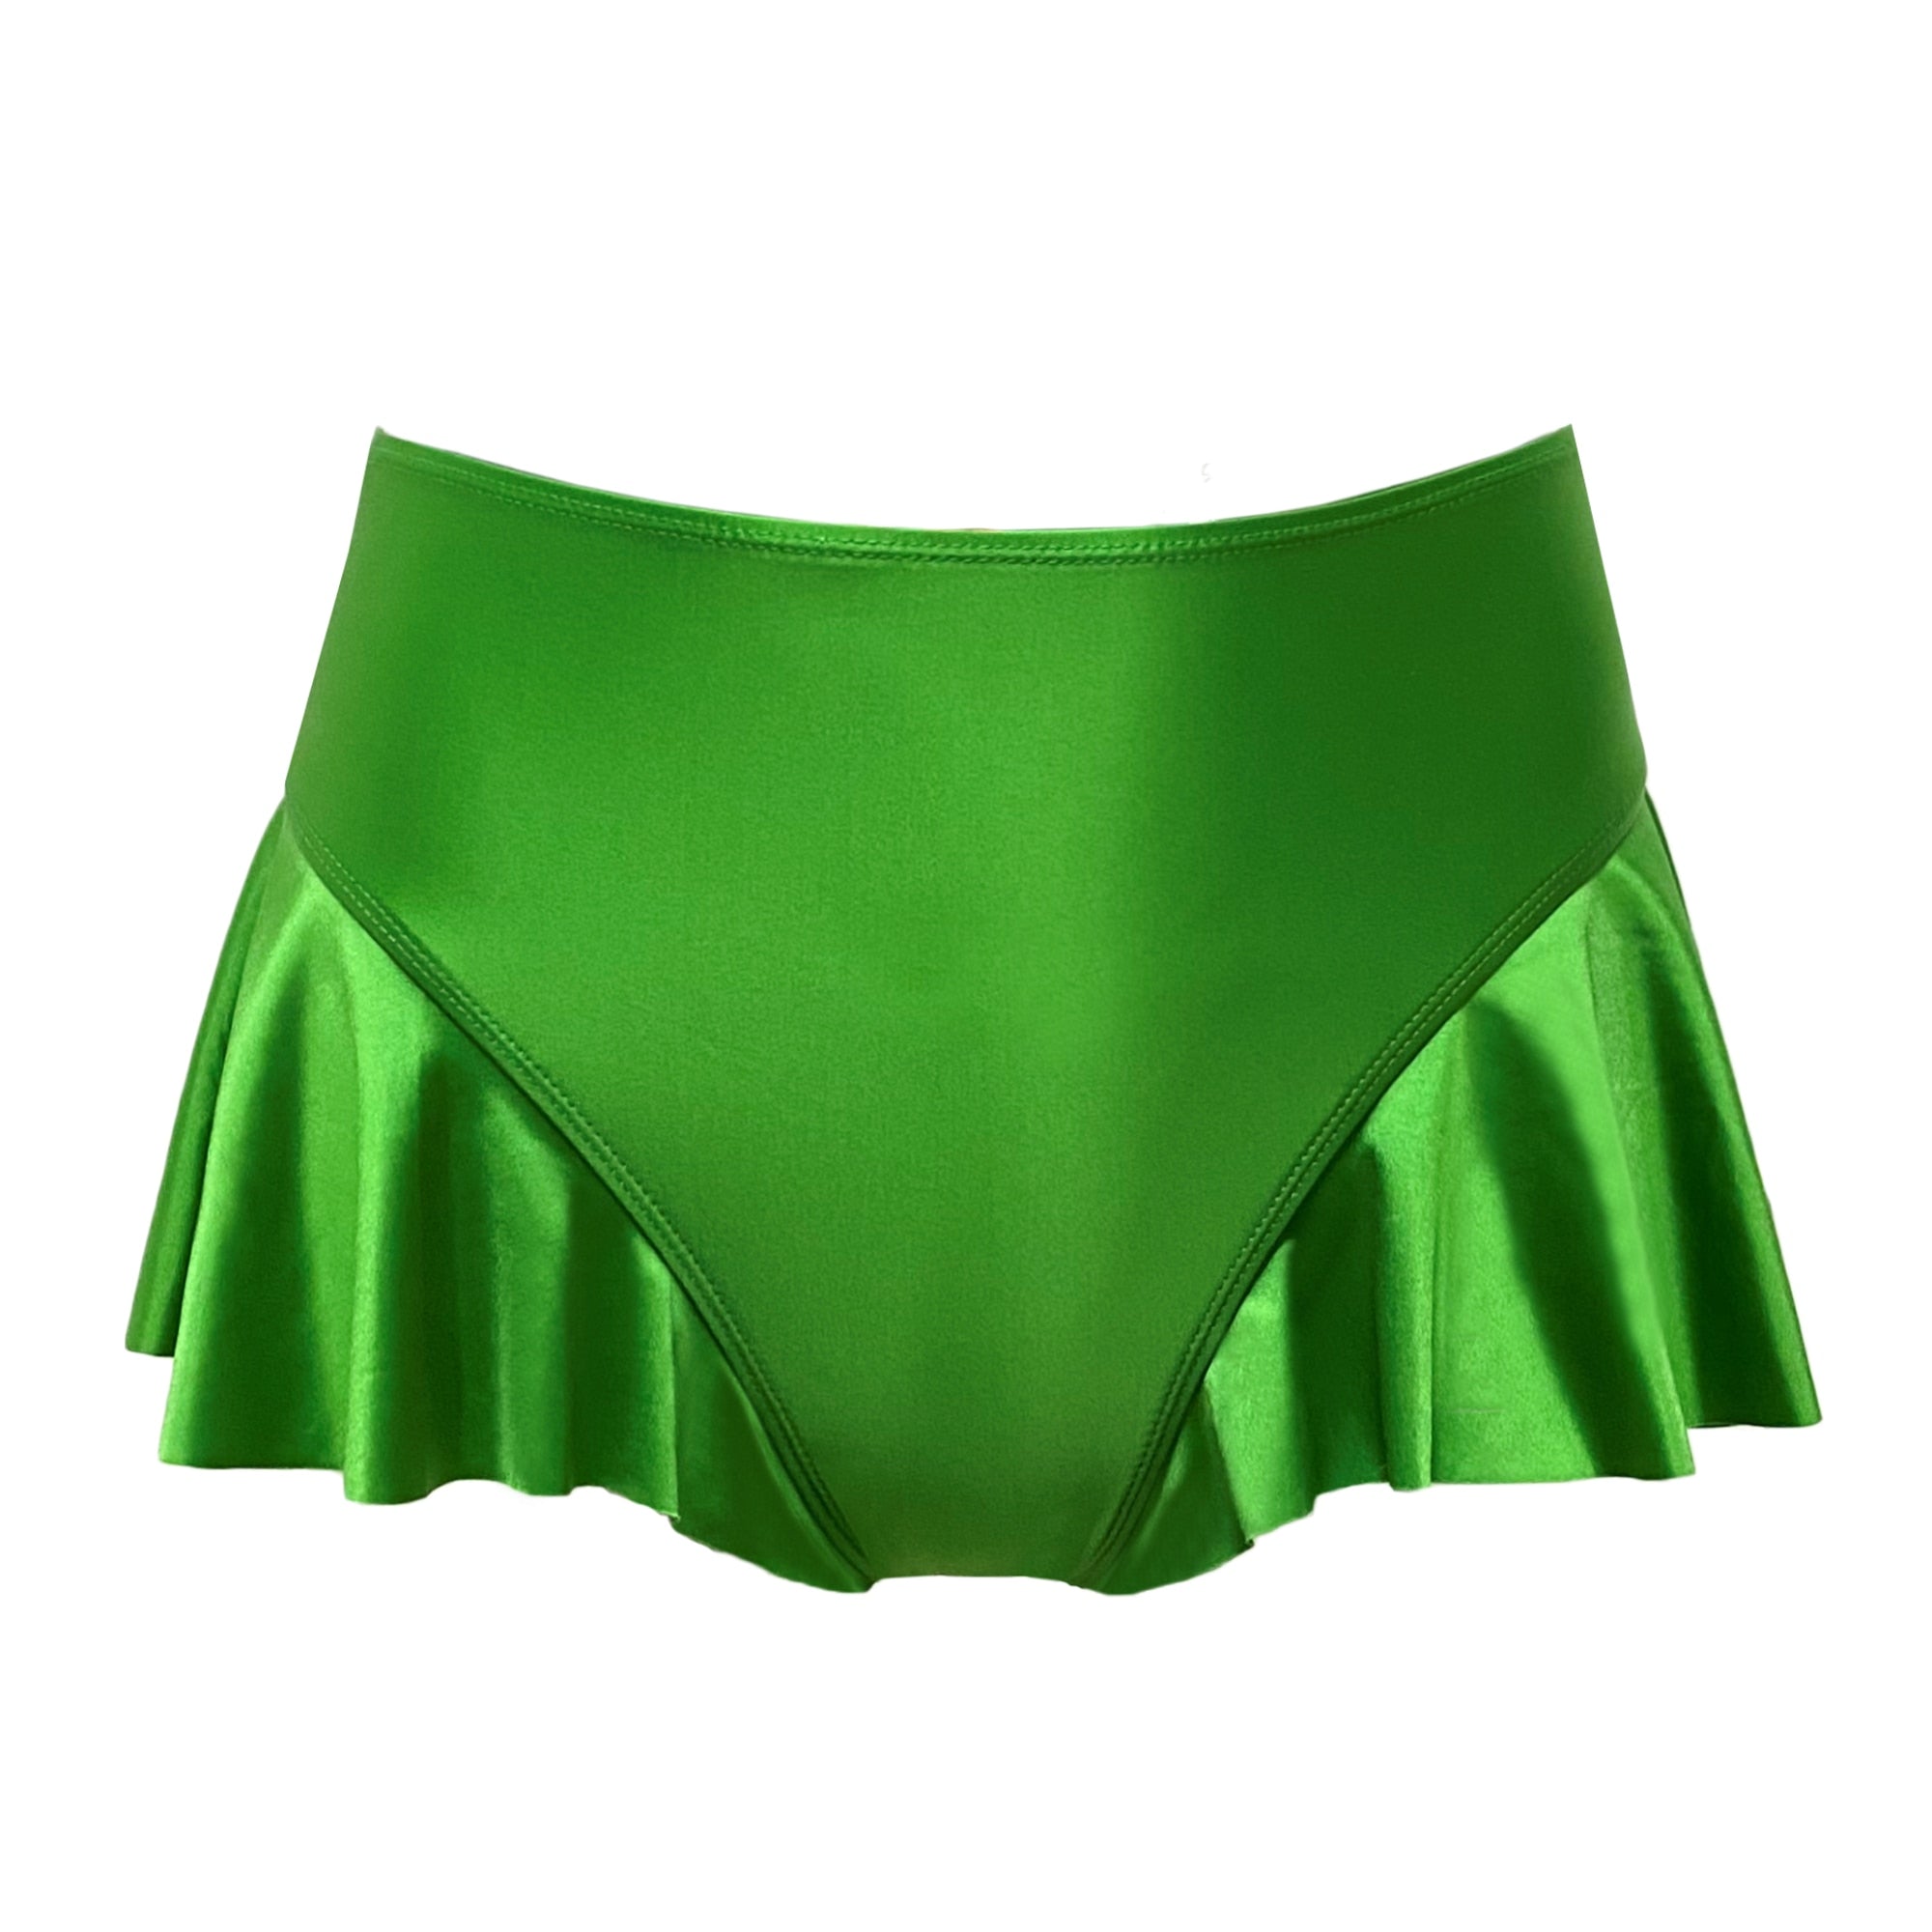 A women's green bikini bottom with a ruffled bottom.